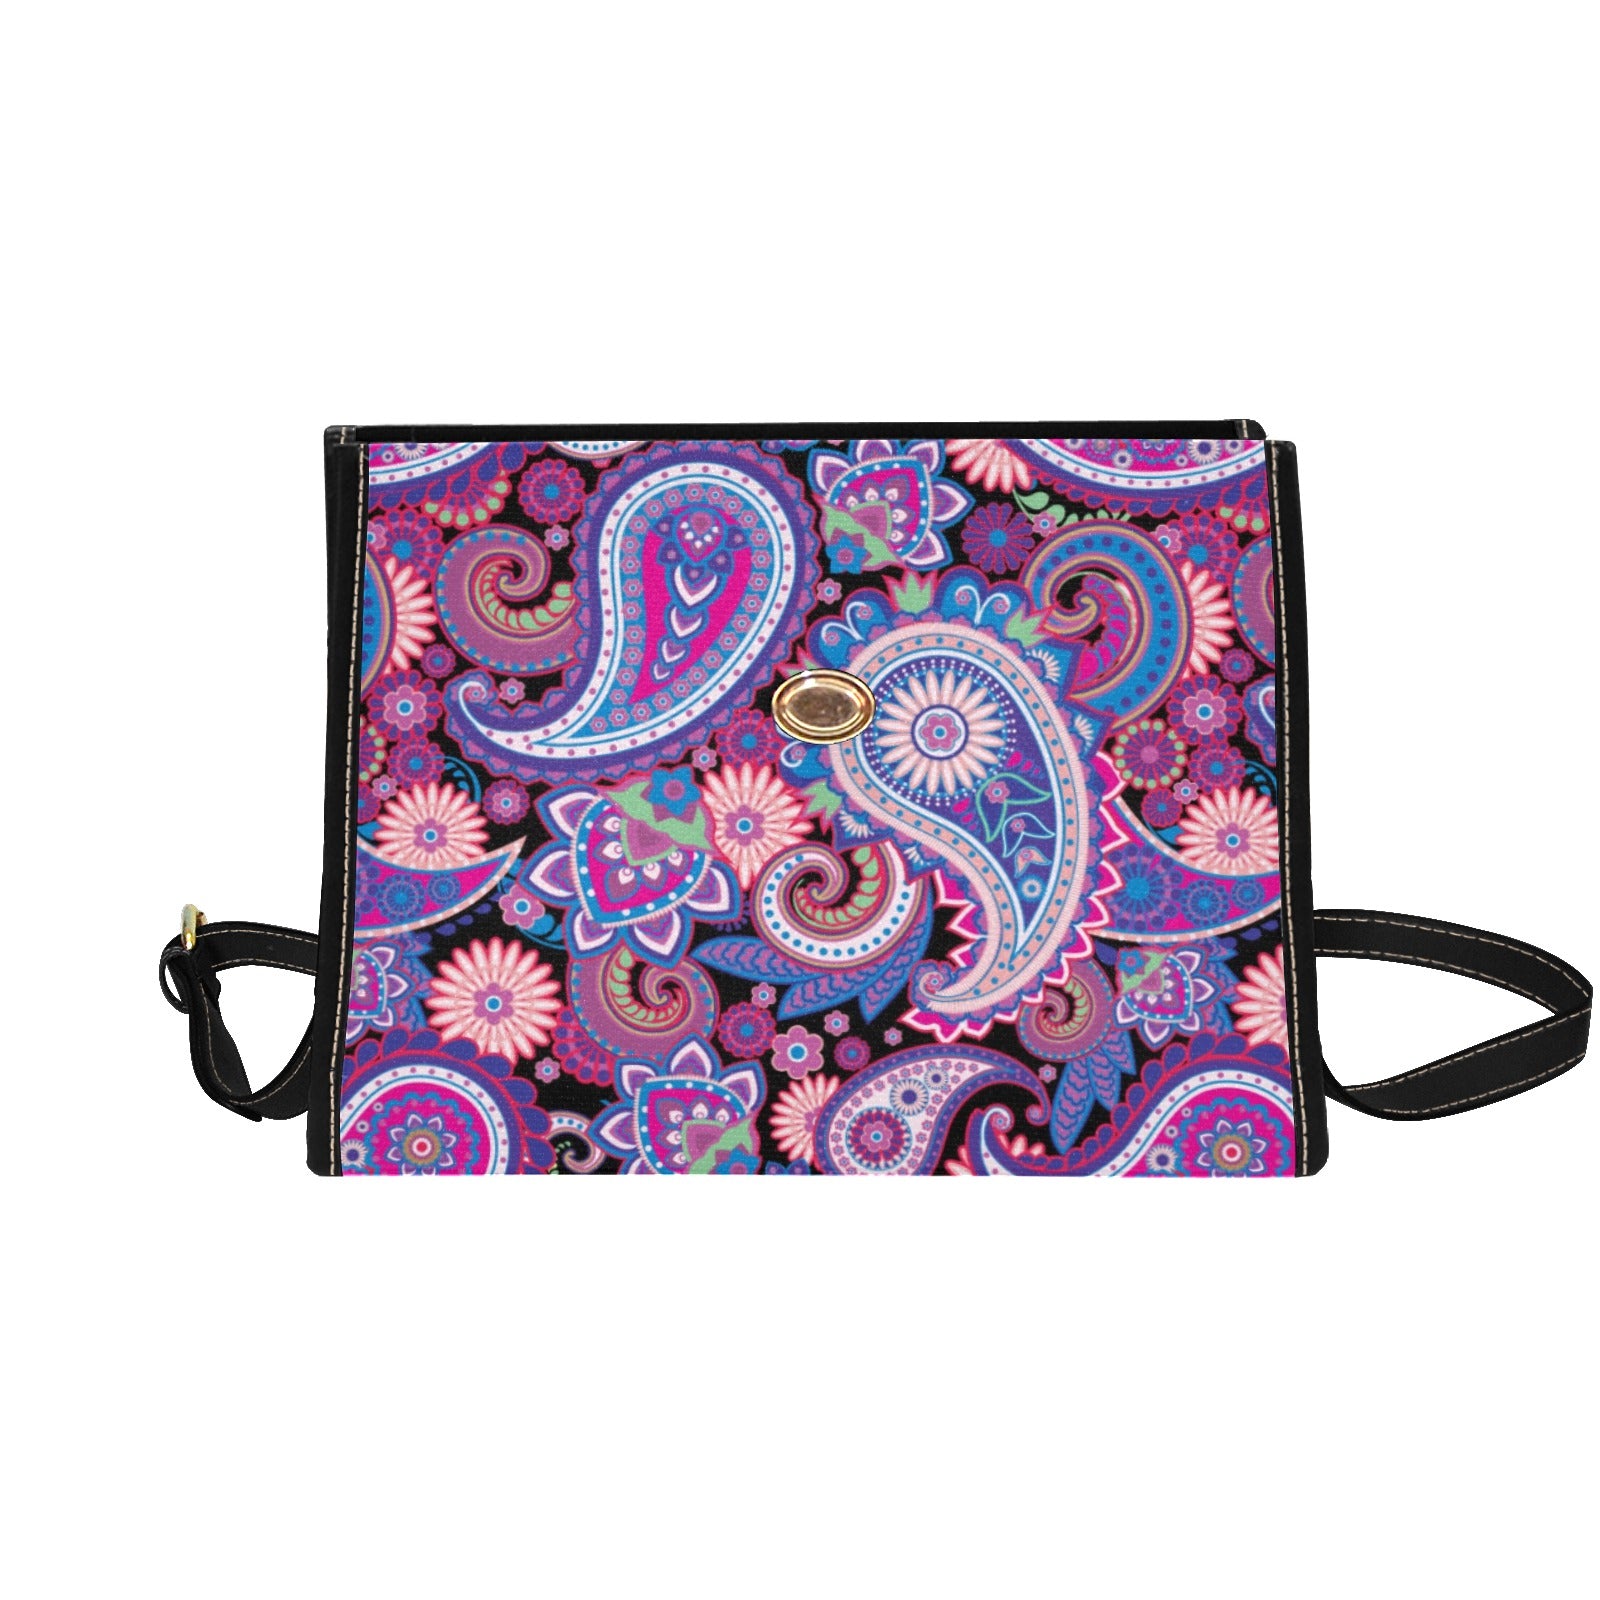 Purple Paisley - Waterproof Canvas Handbag